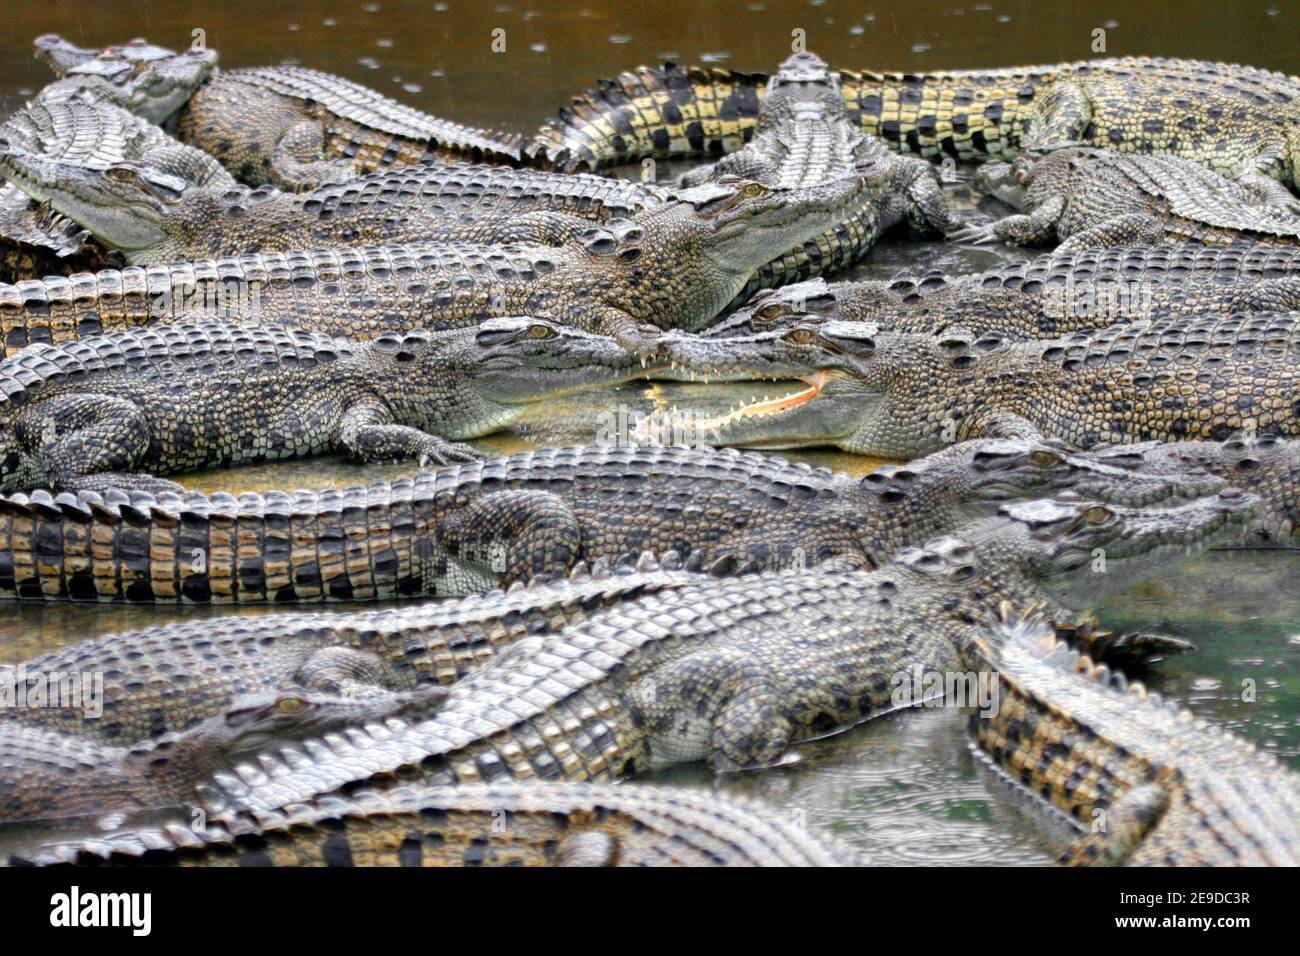 saltwater crocodile, estuarine crocodile (Crocodylus porosus), saltwater crocodiles in a water basin of a breeding station, Australia, Queensland Stock Photo